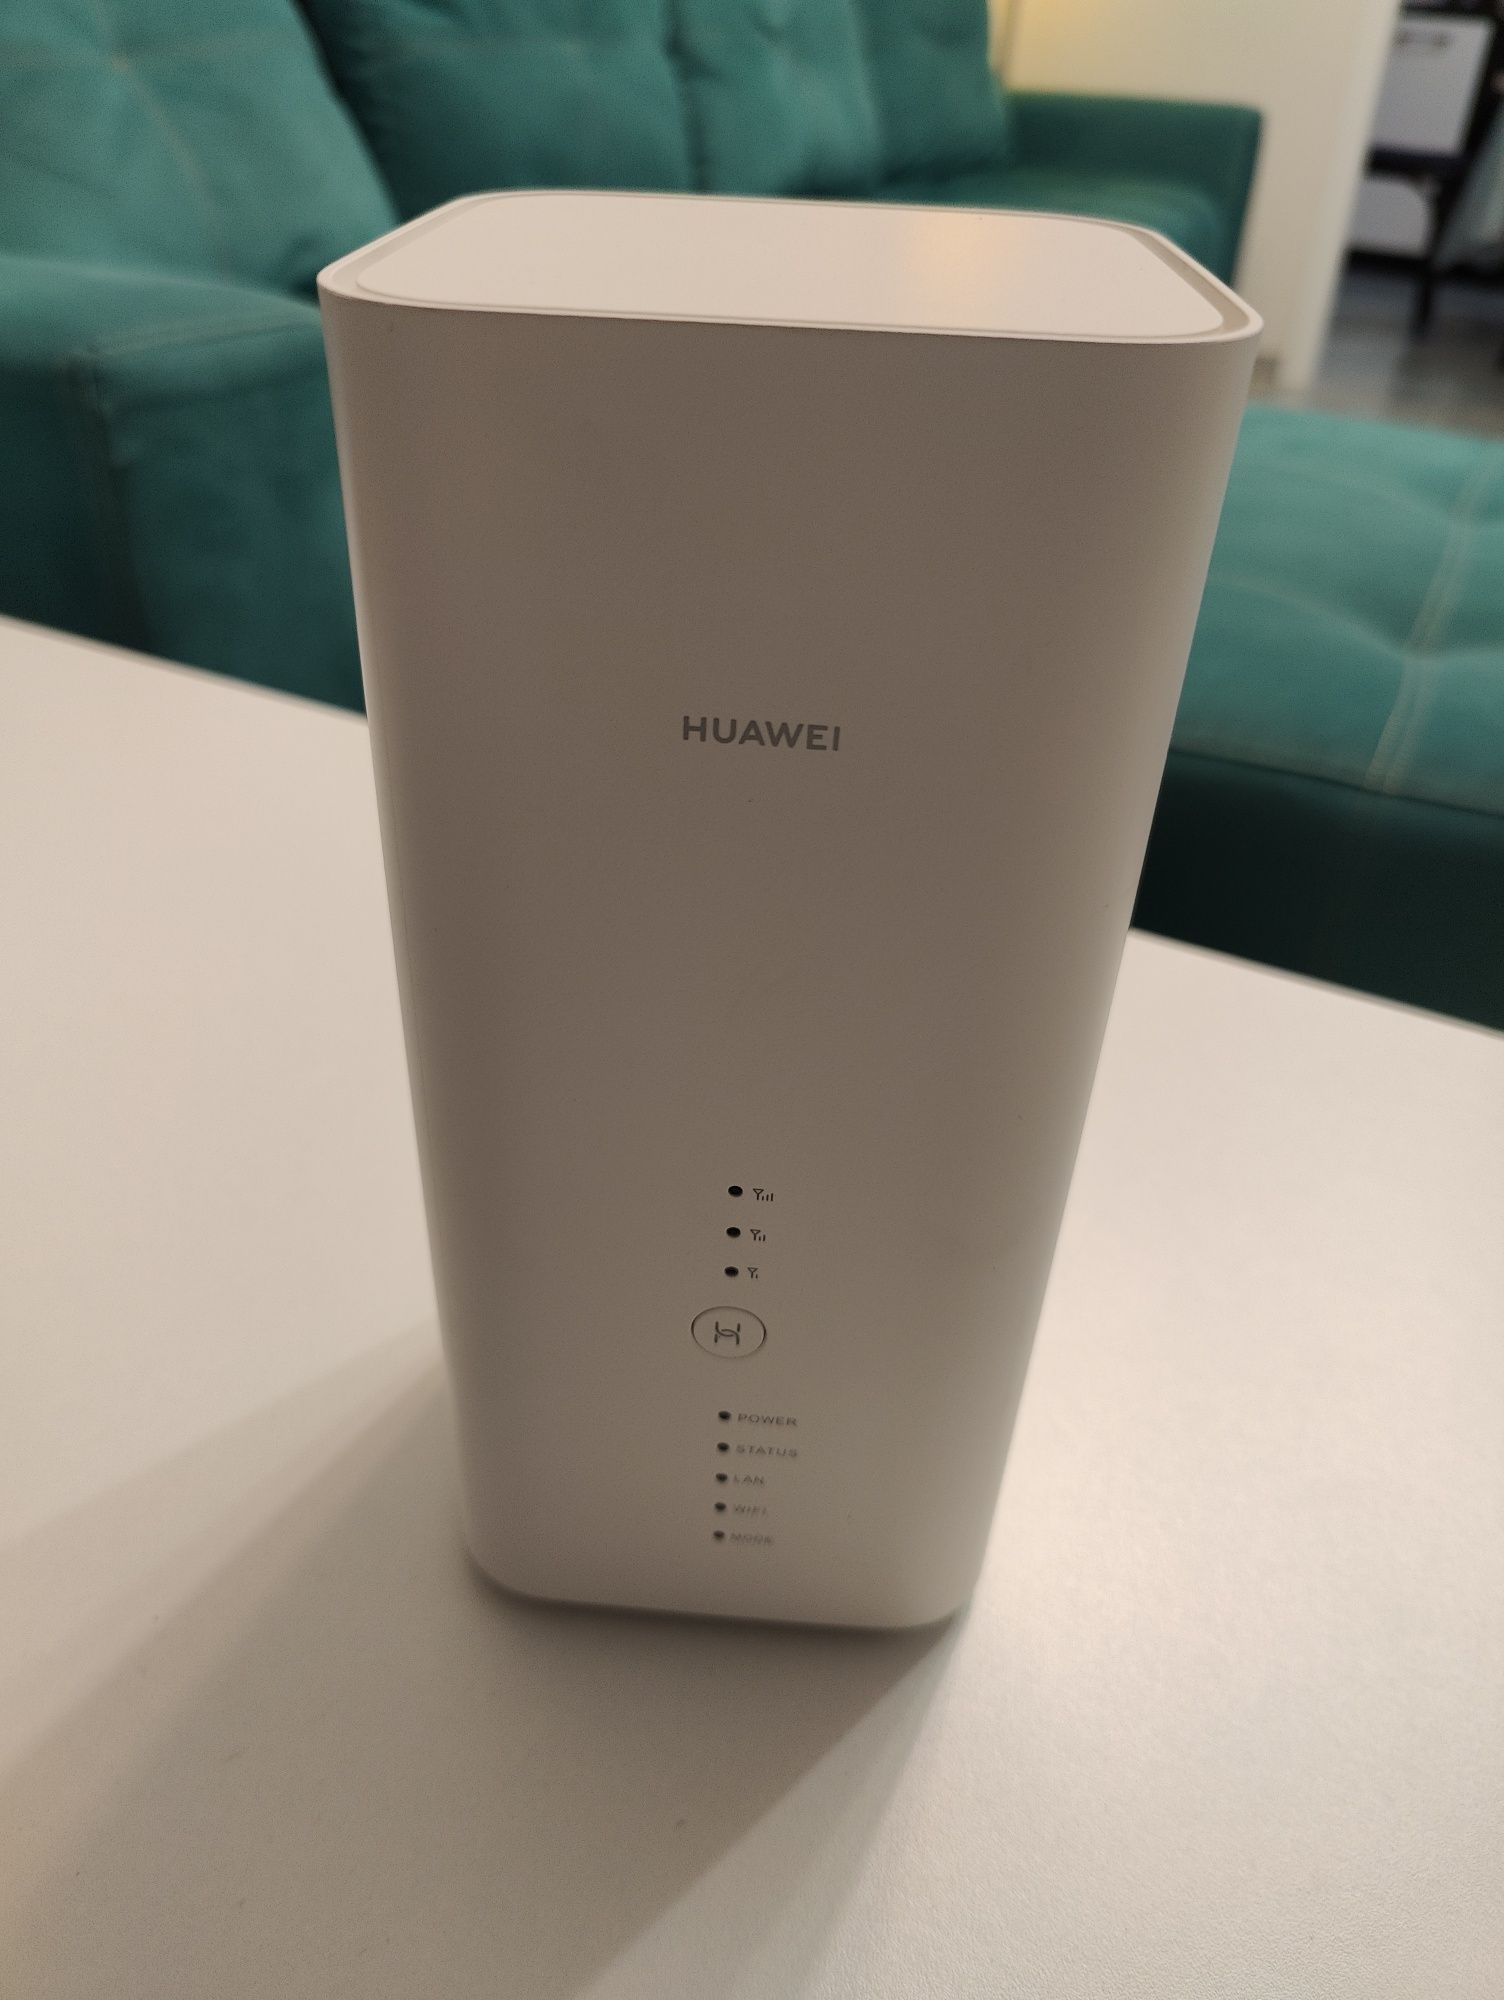 4G модем Huawei 19 категории.